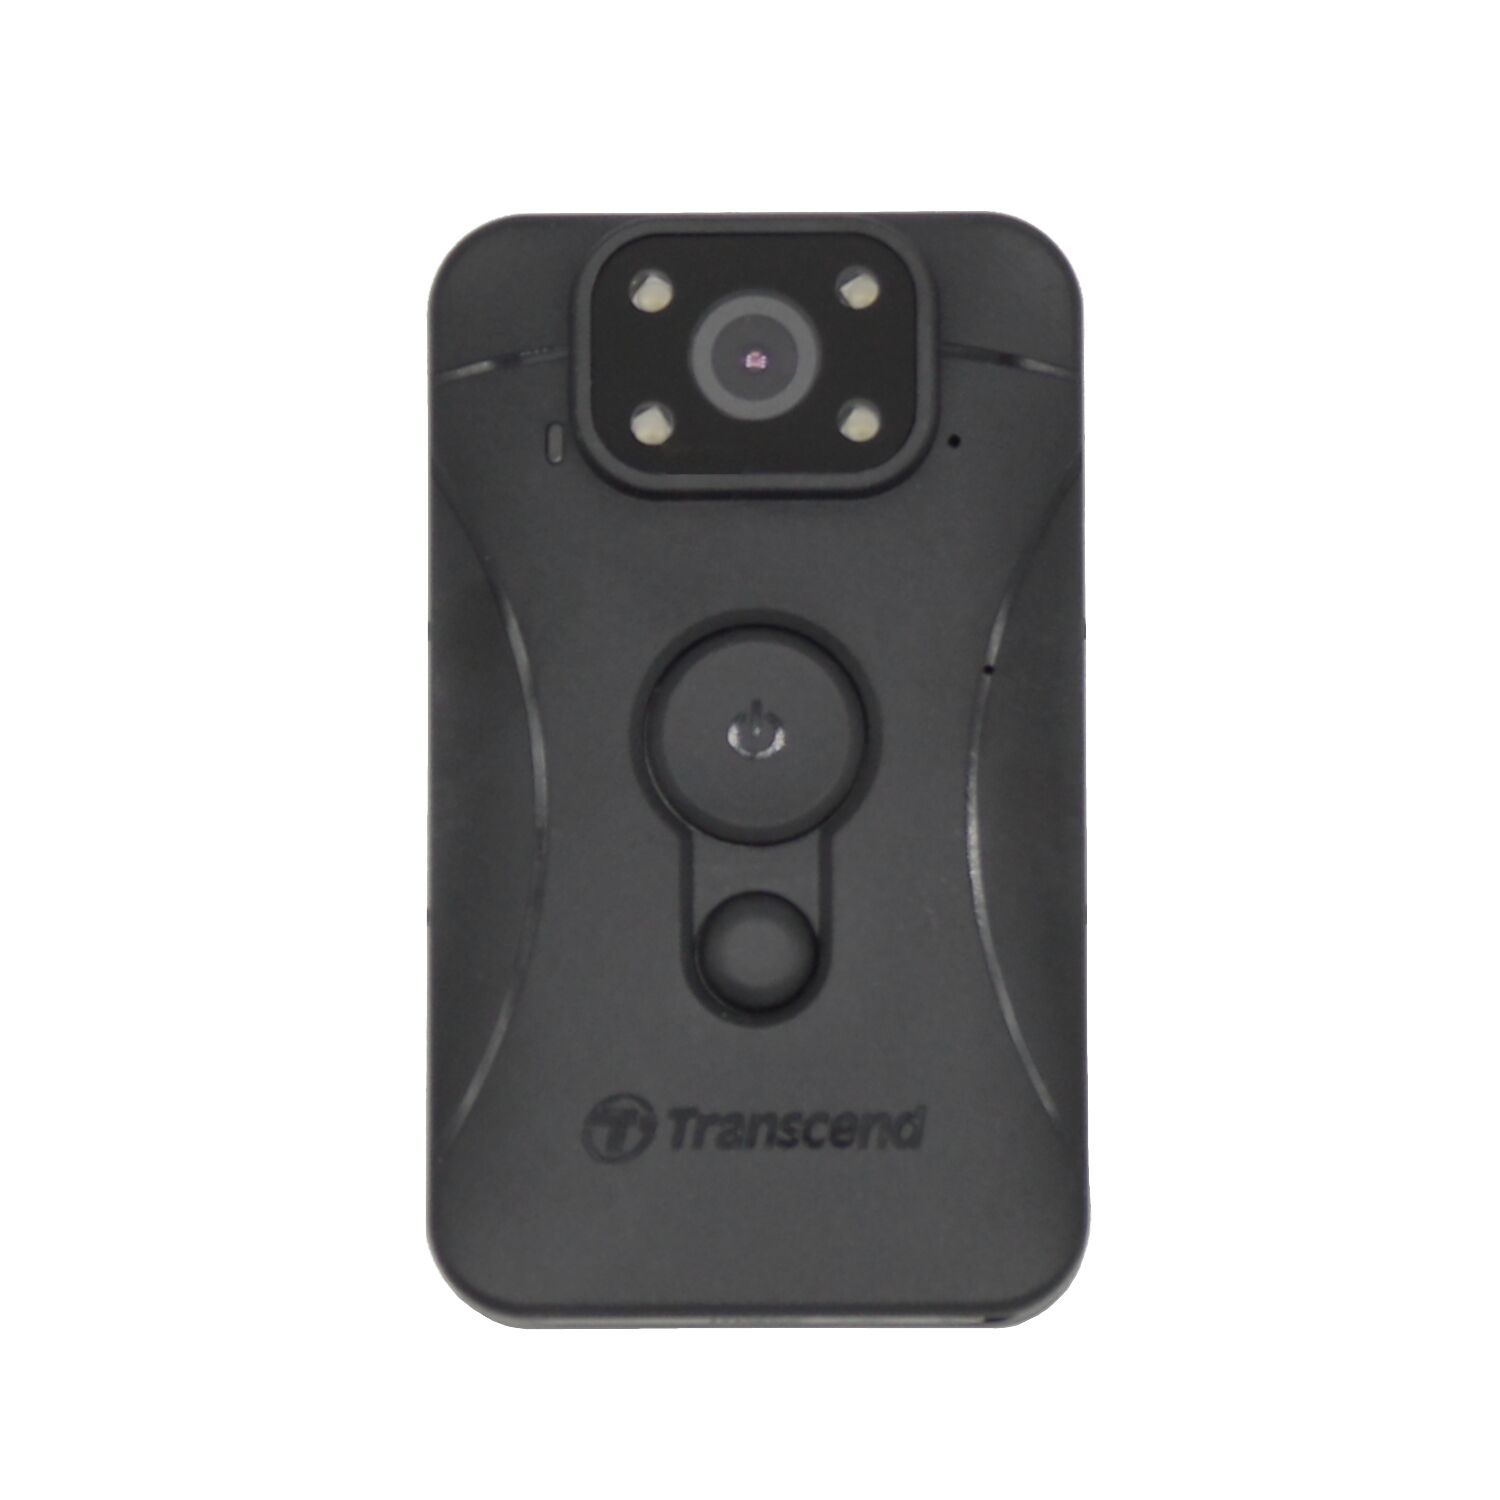 Transcend DrivePro Body 10 | Civilian Body Camera | Well-Priced